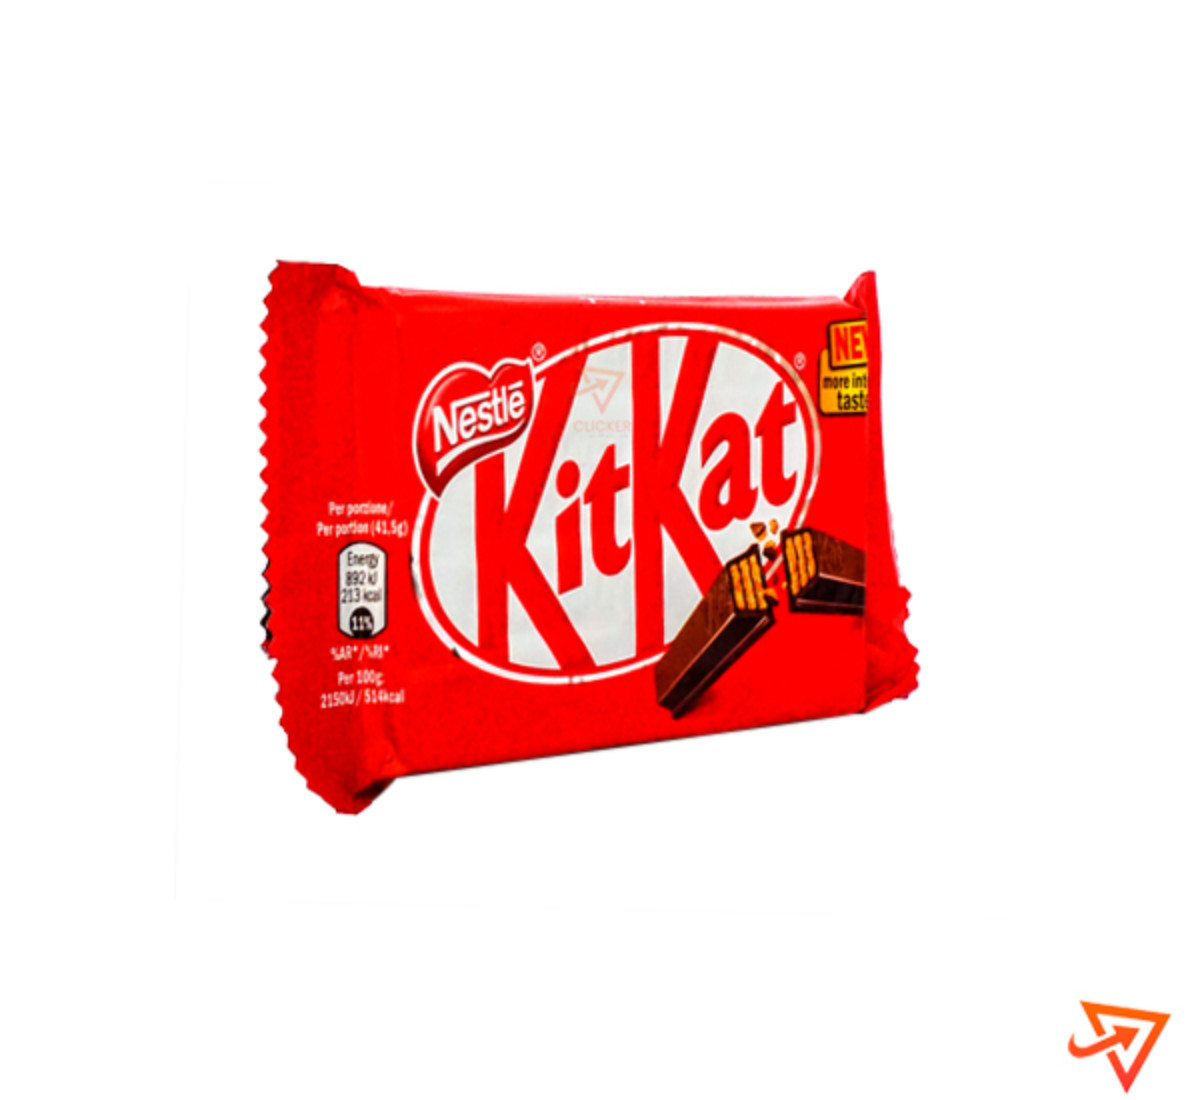 Clicker product 41.5g NESTLE  Kitkat chocolate 1163